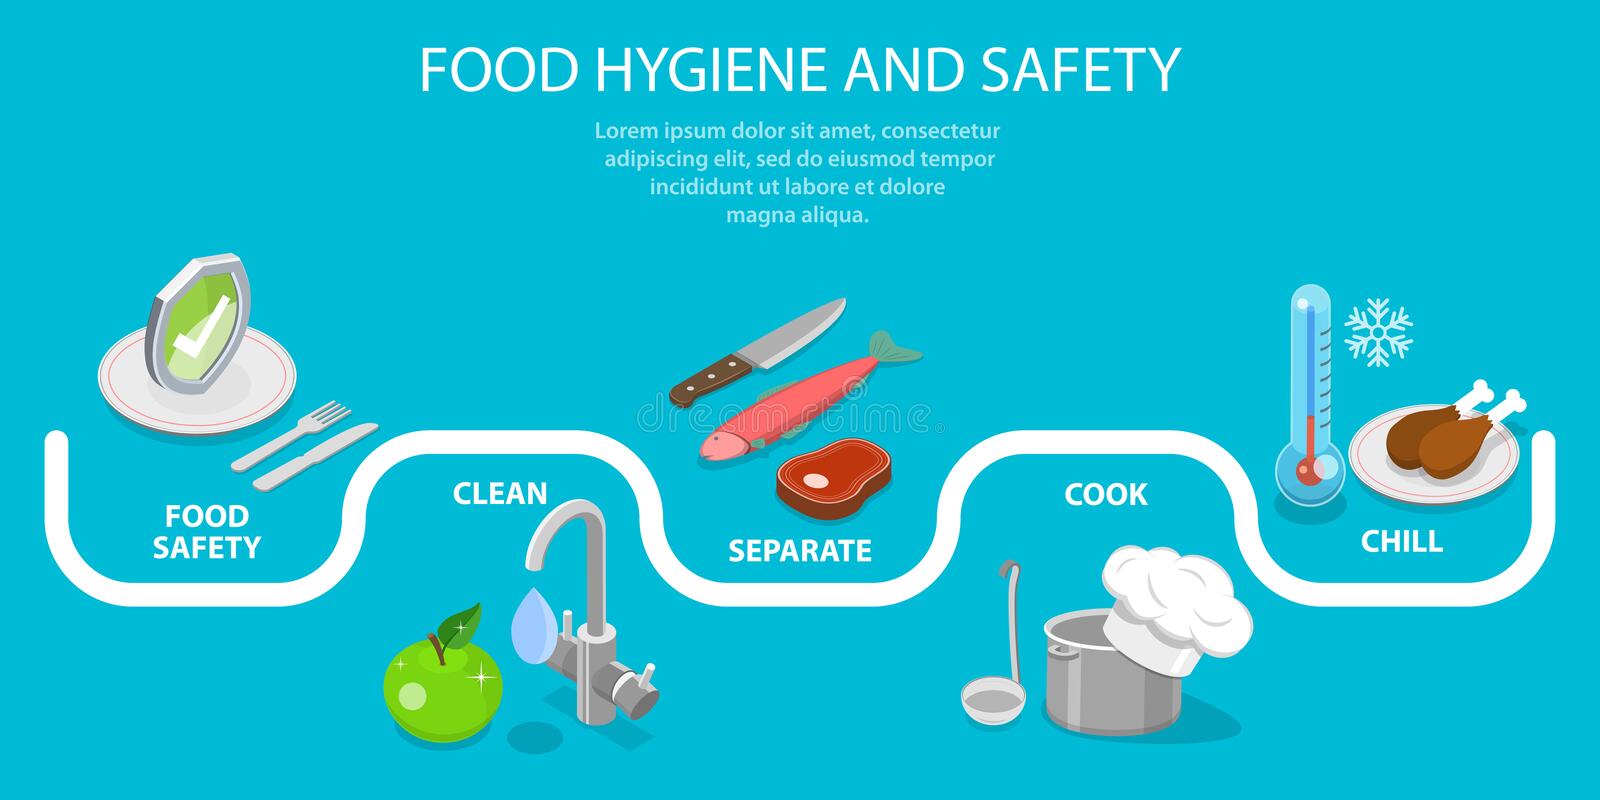 Food Hygiene and Sanitation